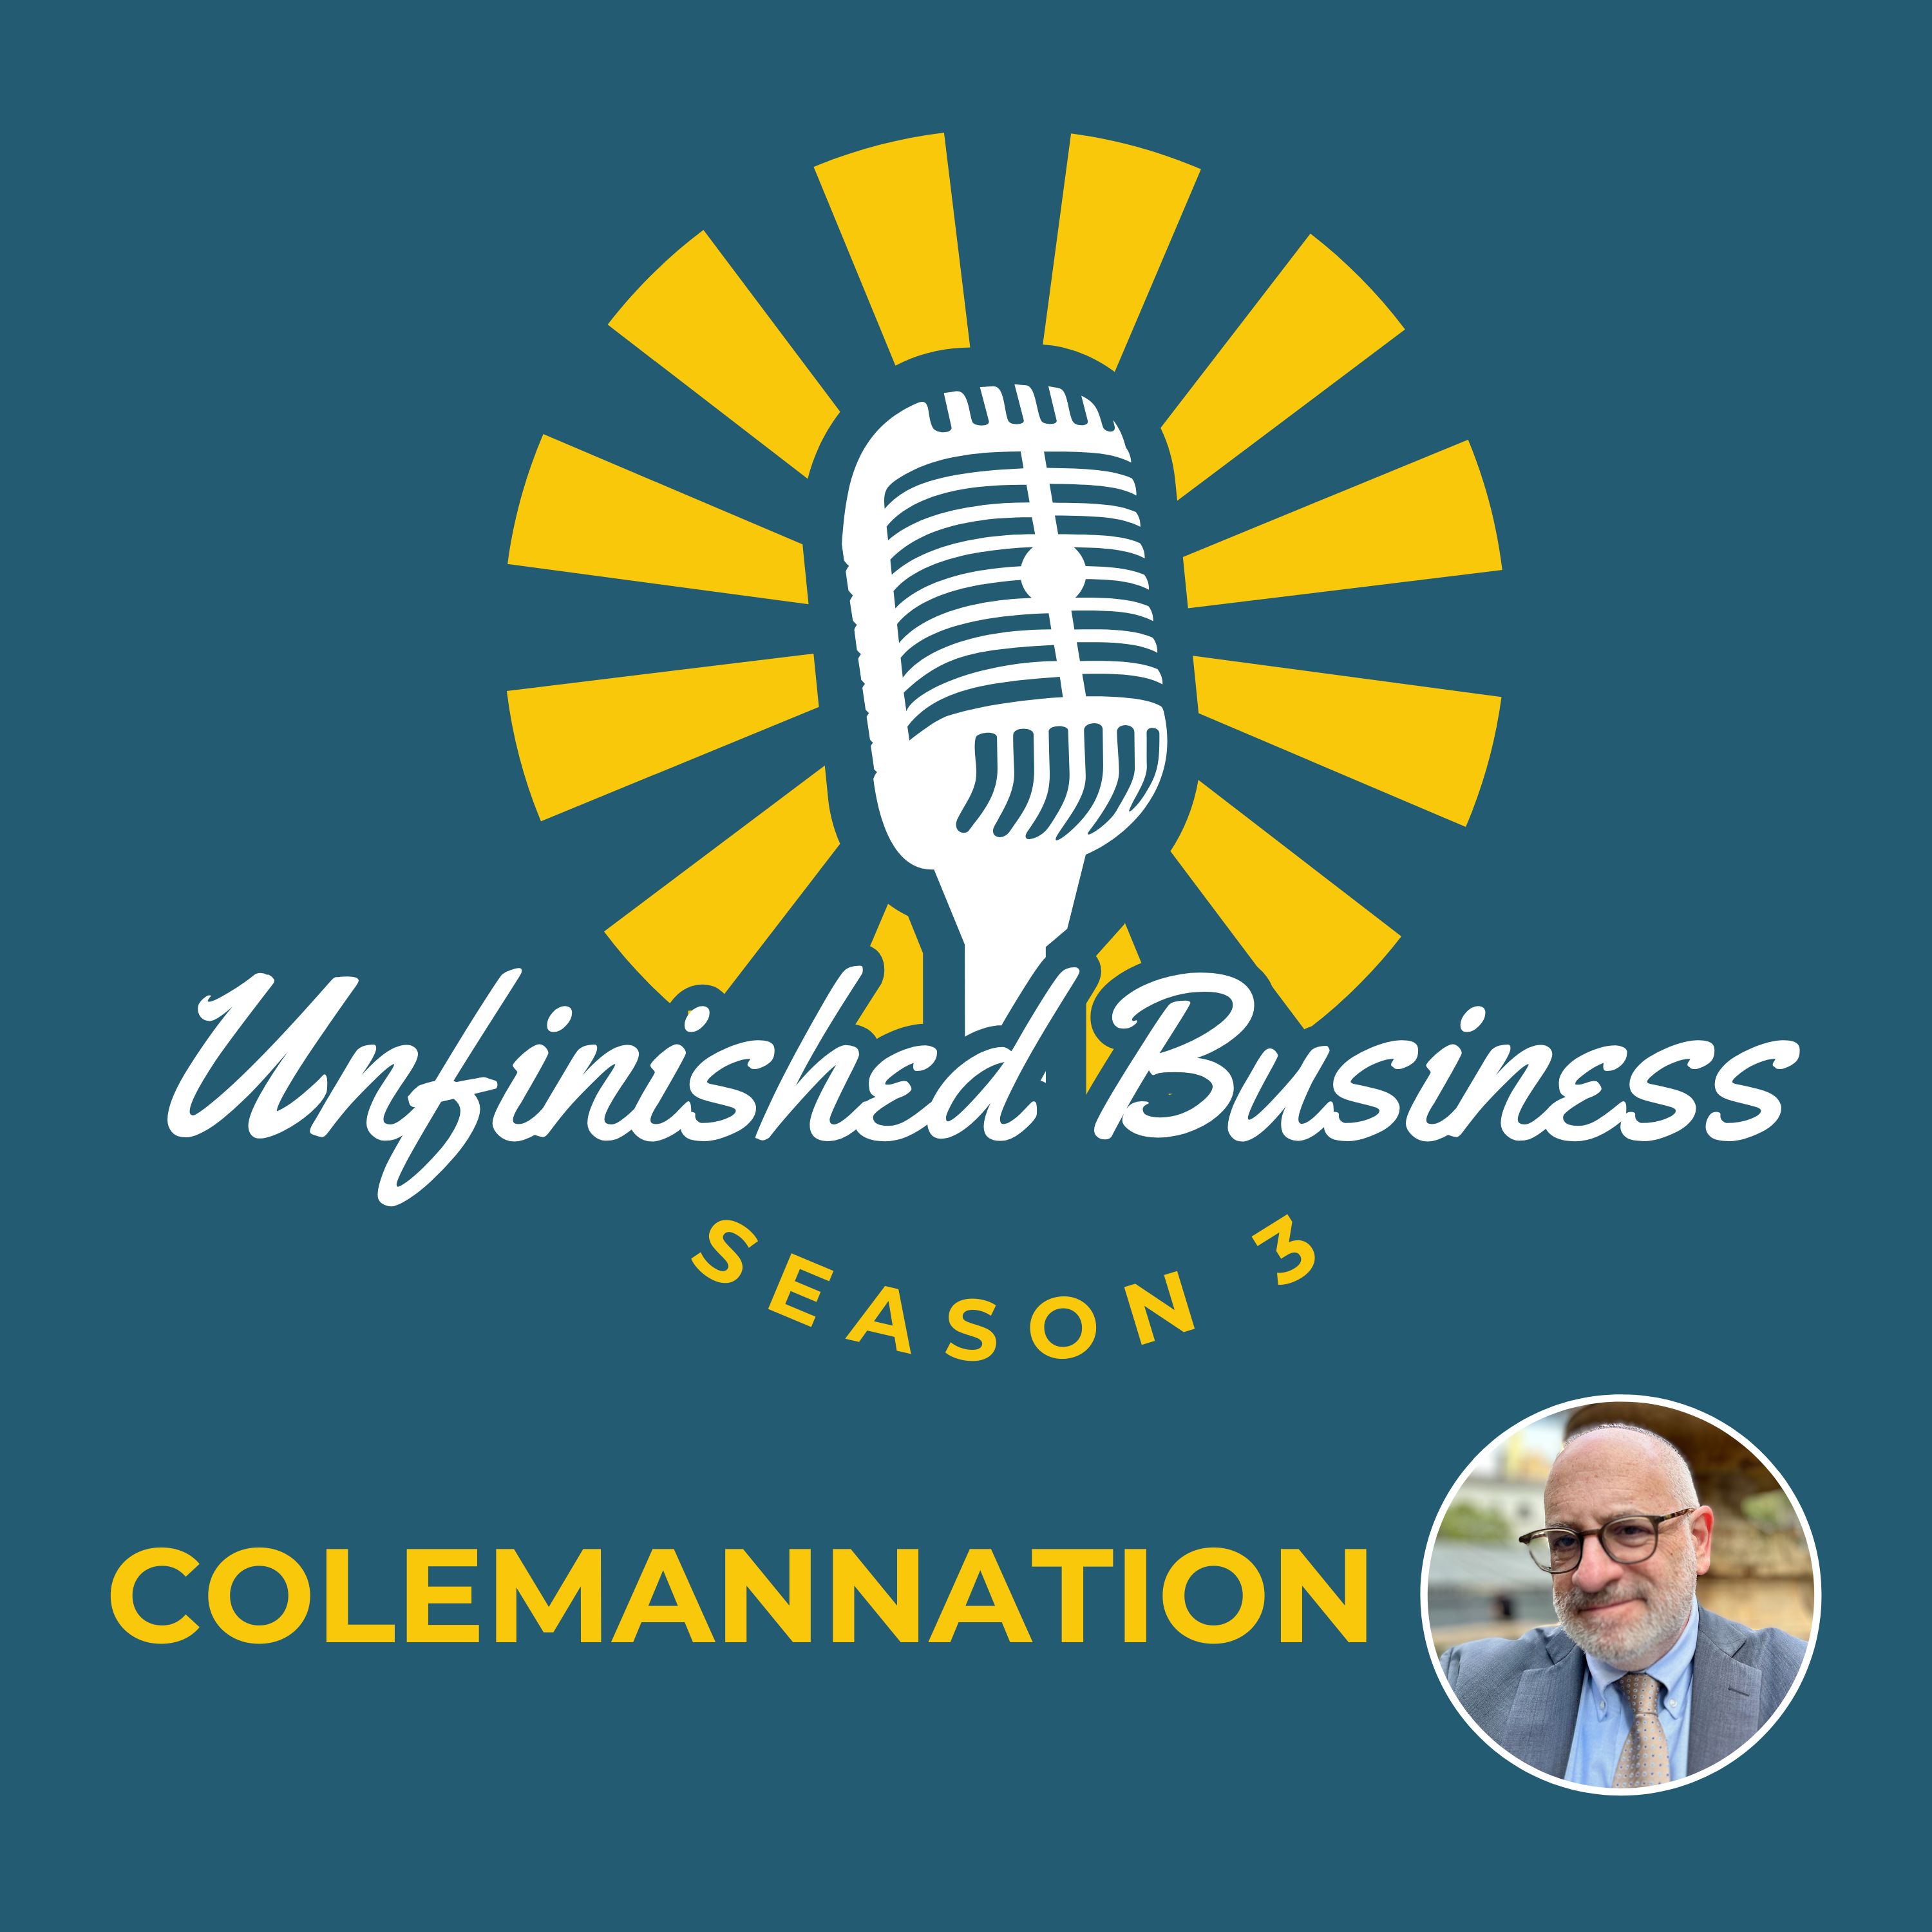 ColemanNation - Season 3: Ron Coleman's Unfinished Business